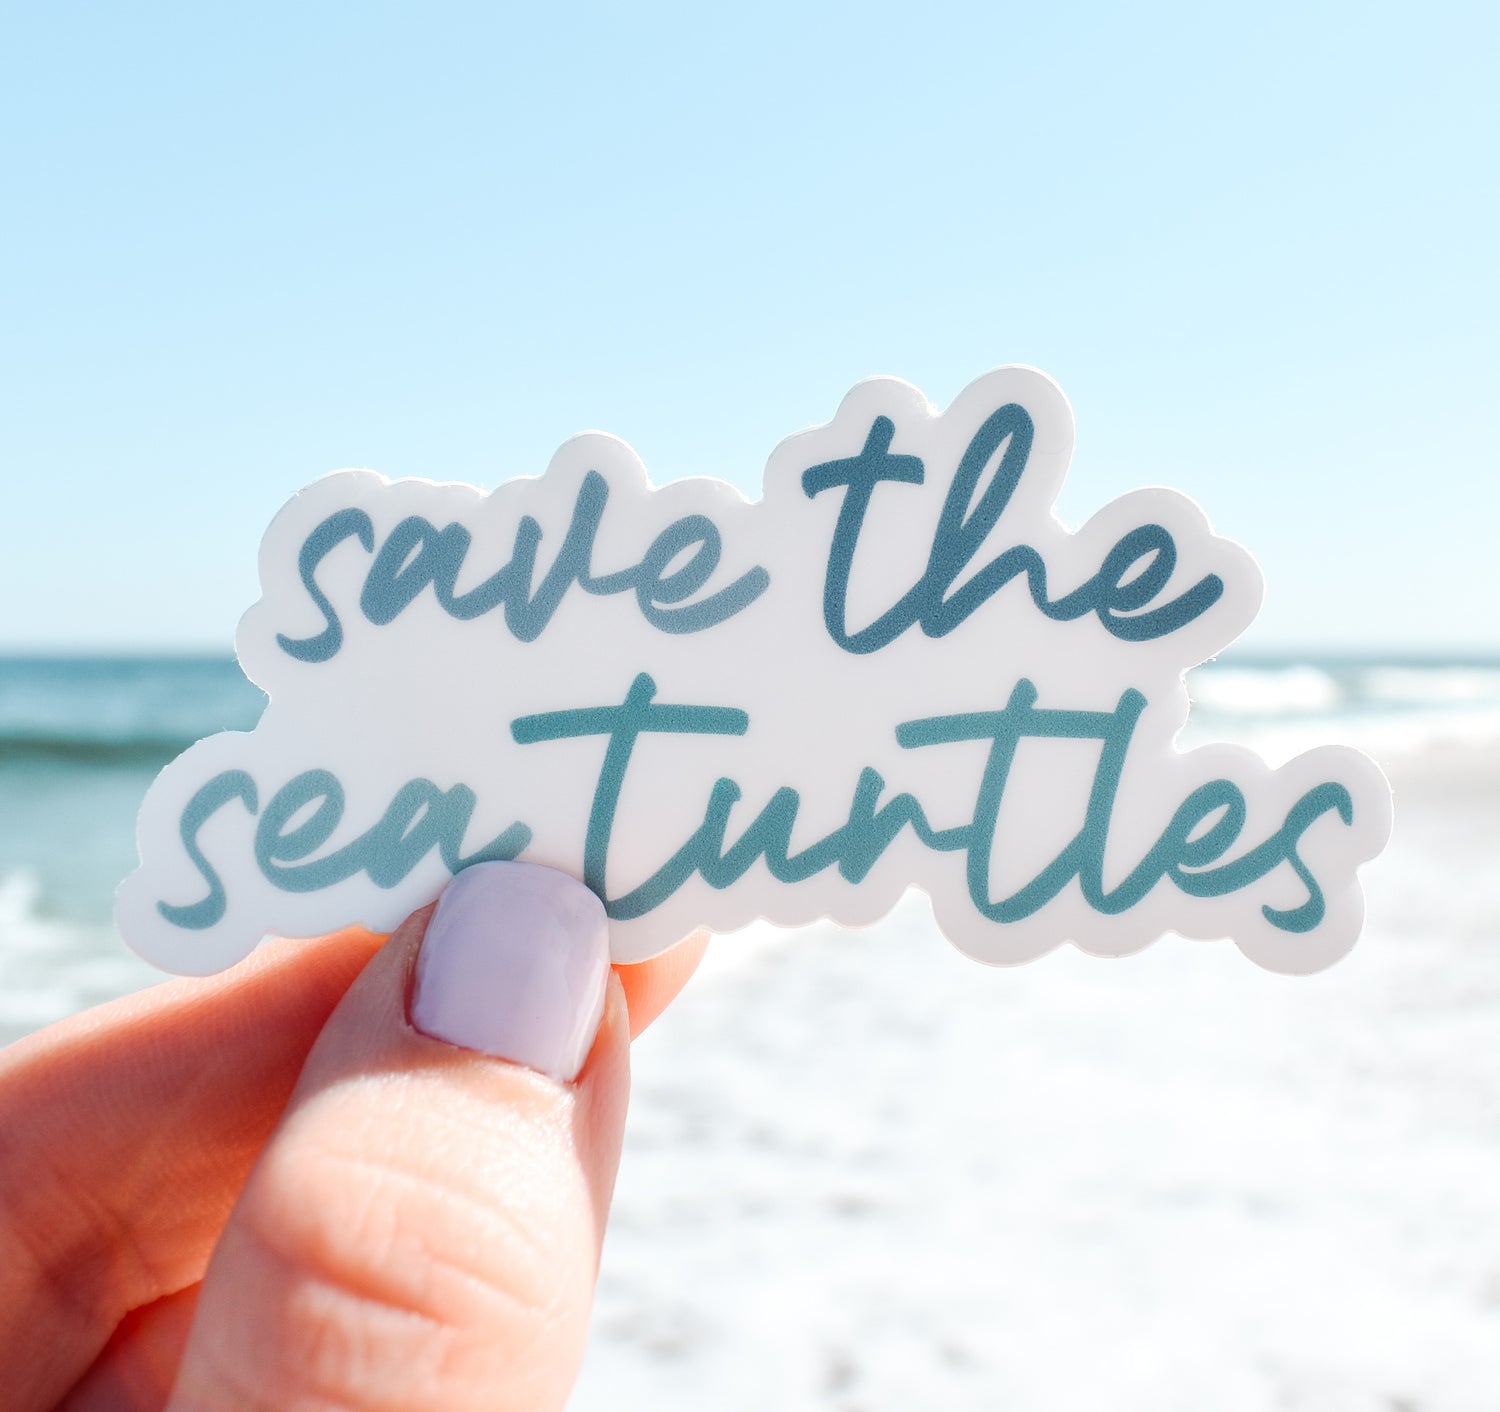 Save the sea turtles ocean conservation vinyl sticker